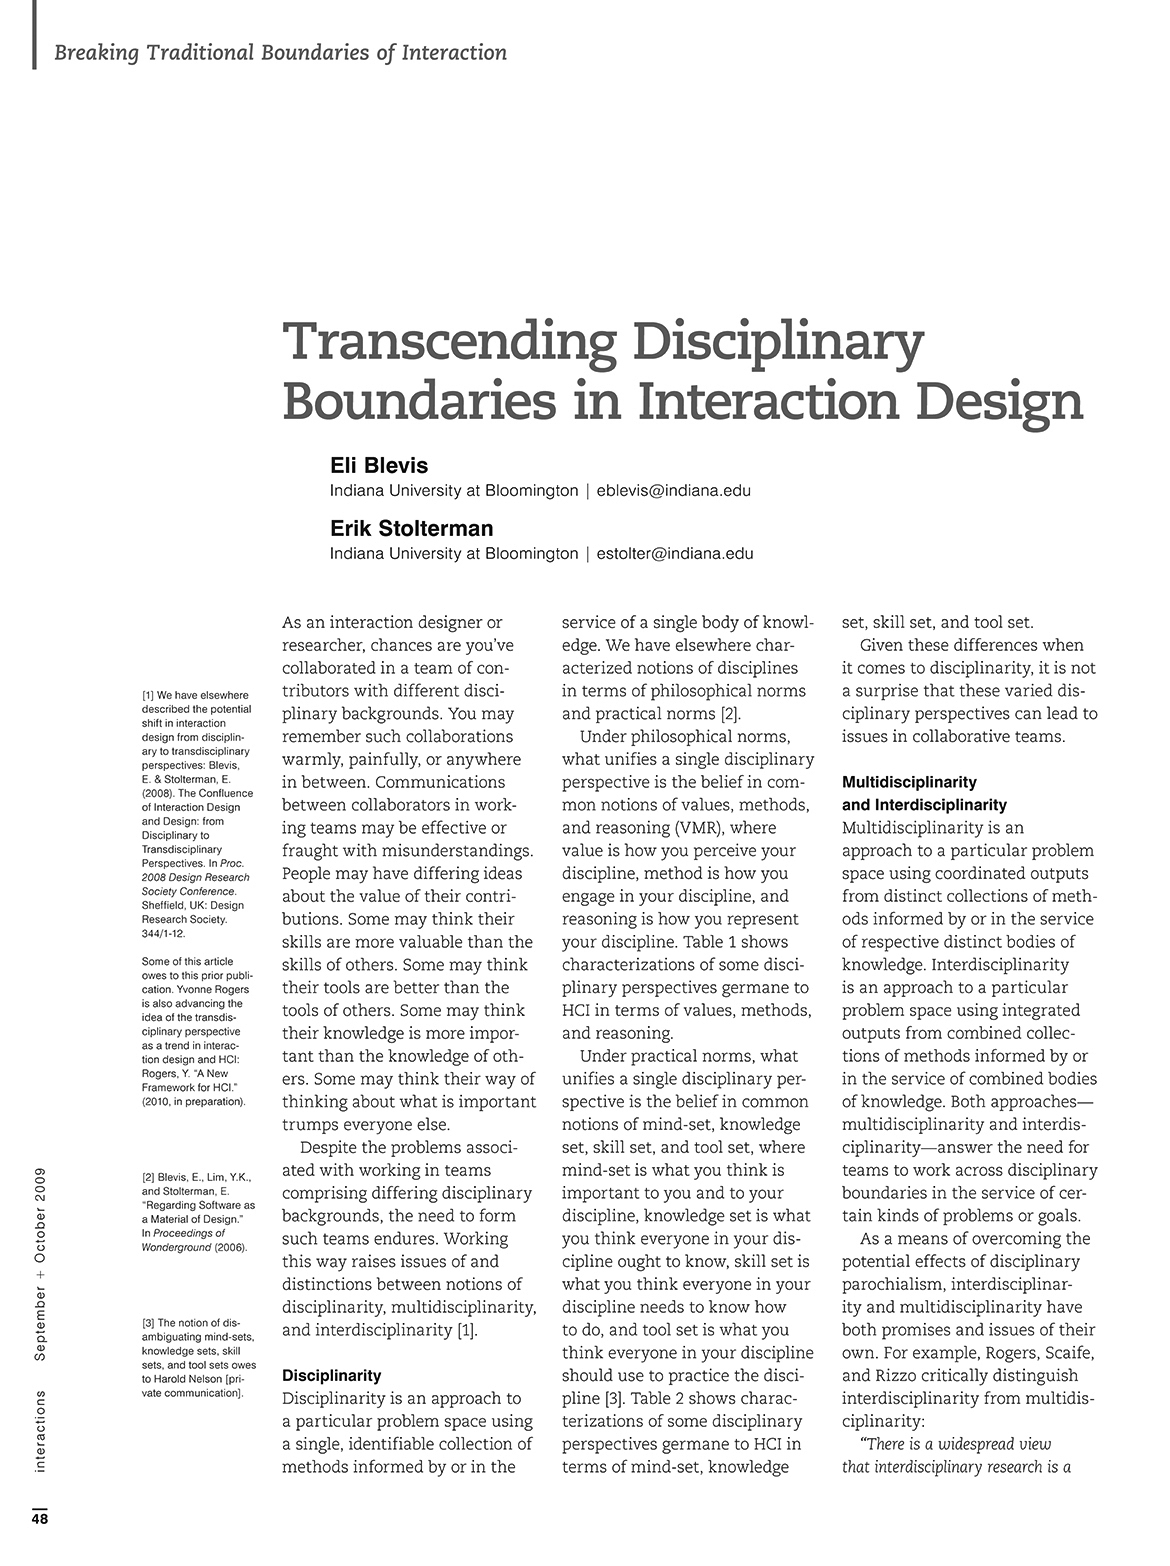 Transdisciplinary Design